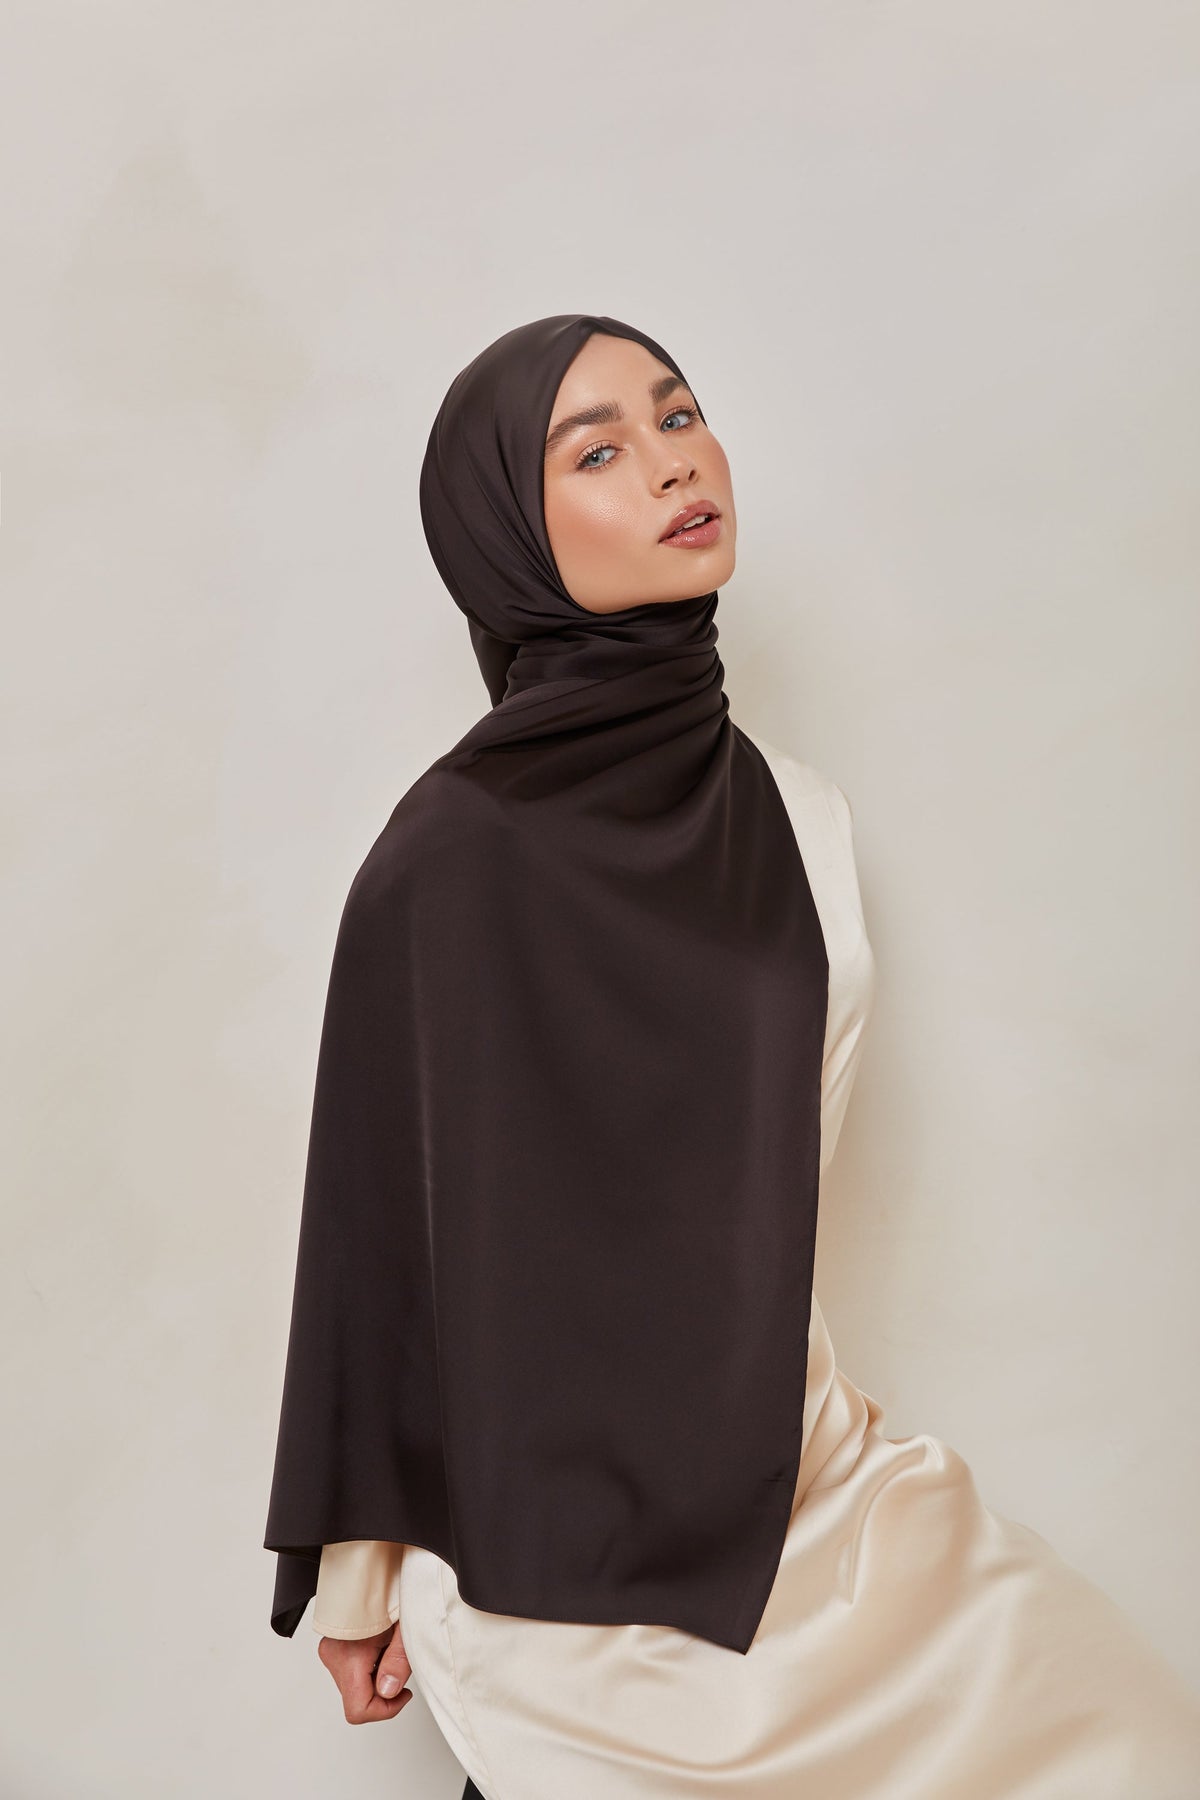 SMOOTH Satin Hijab - Strength Veiled Collection 